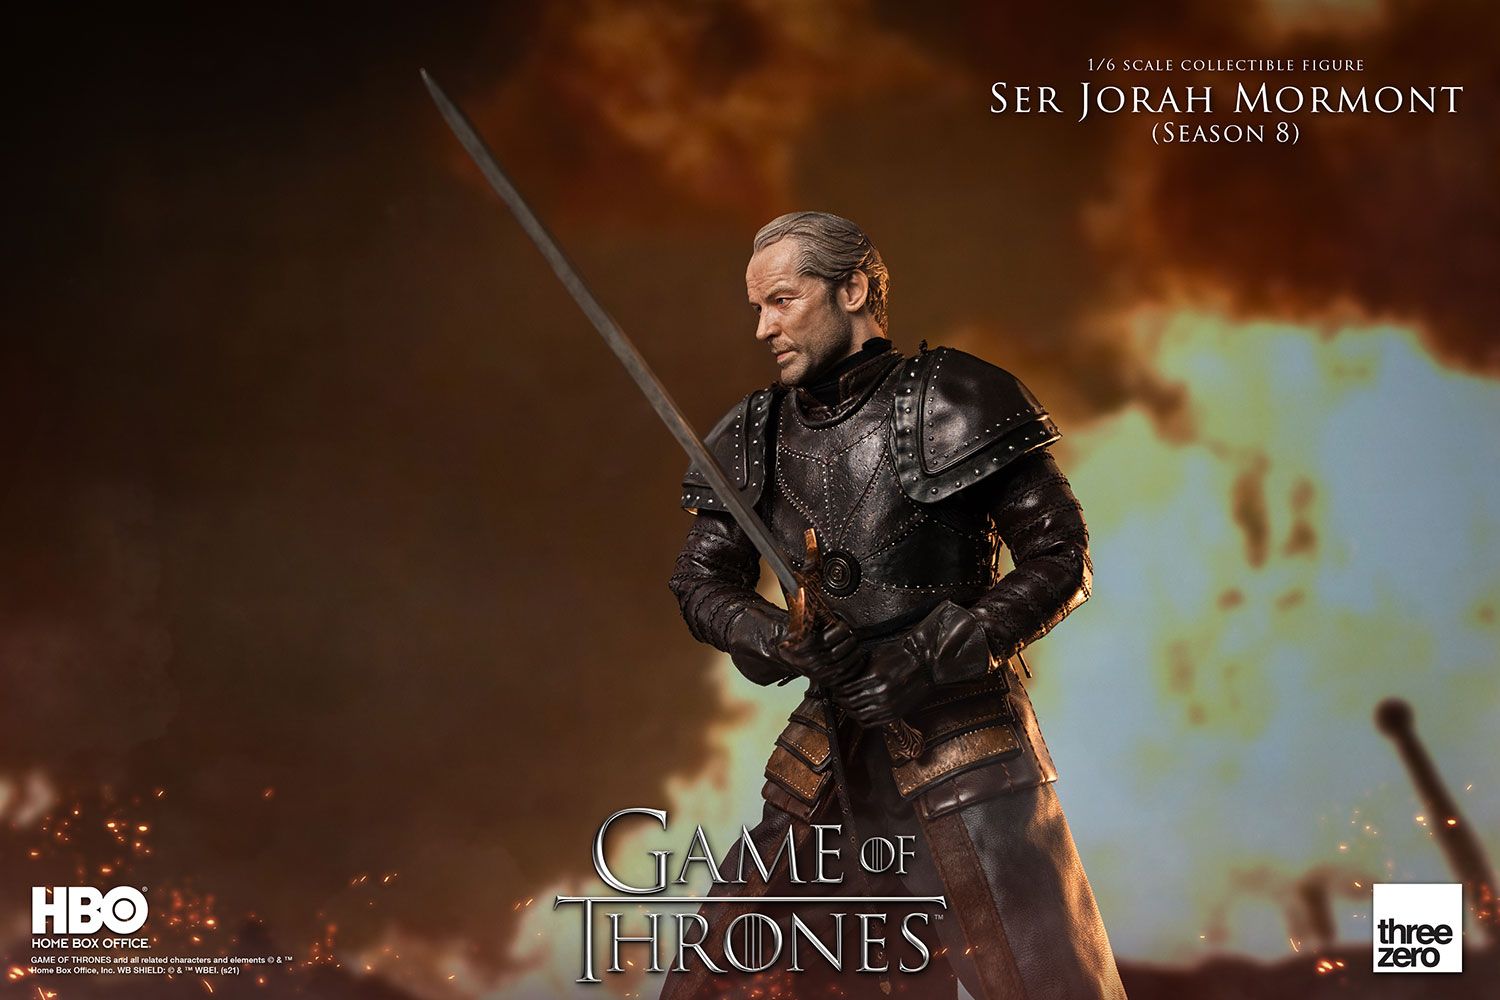 Iain Glen As Jorah Mormont In Game Of Thrones Season 7 Wallpapers